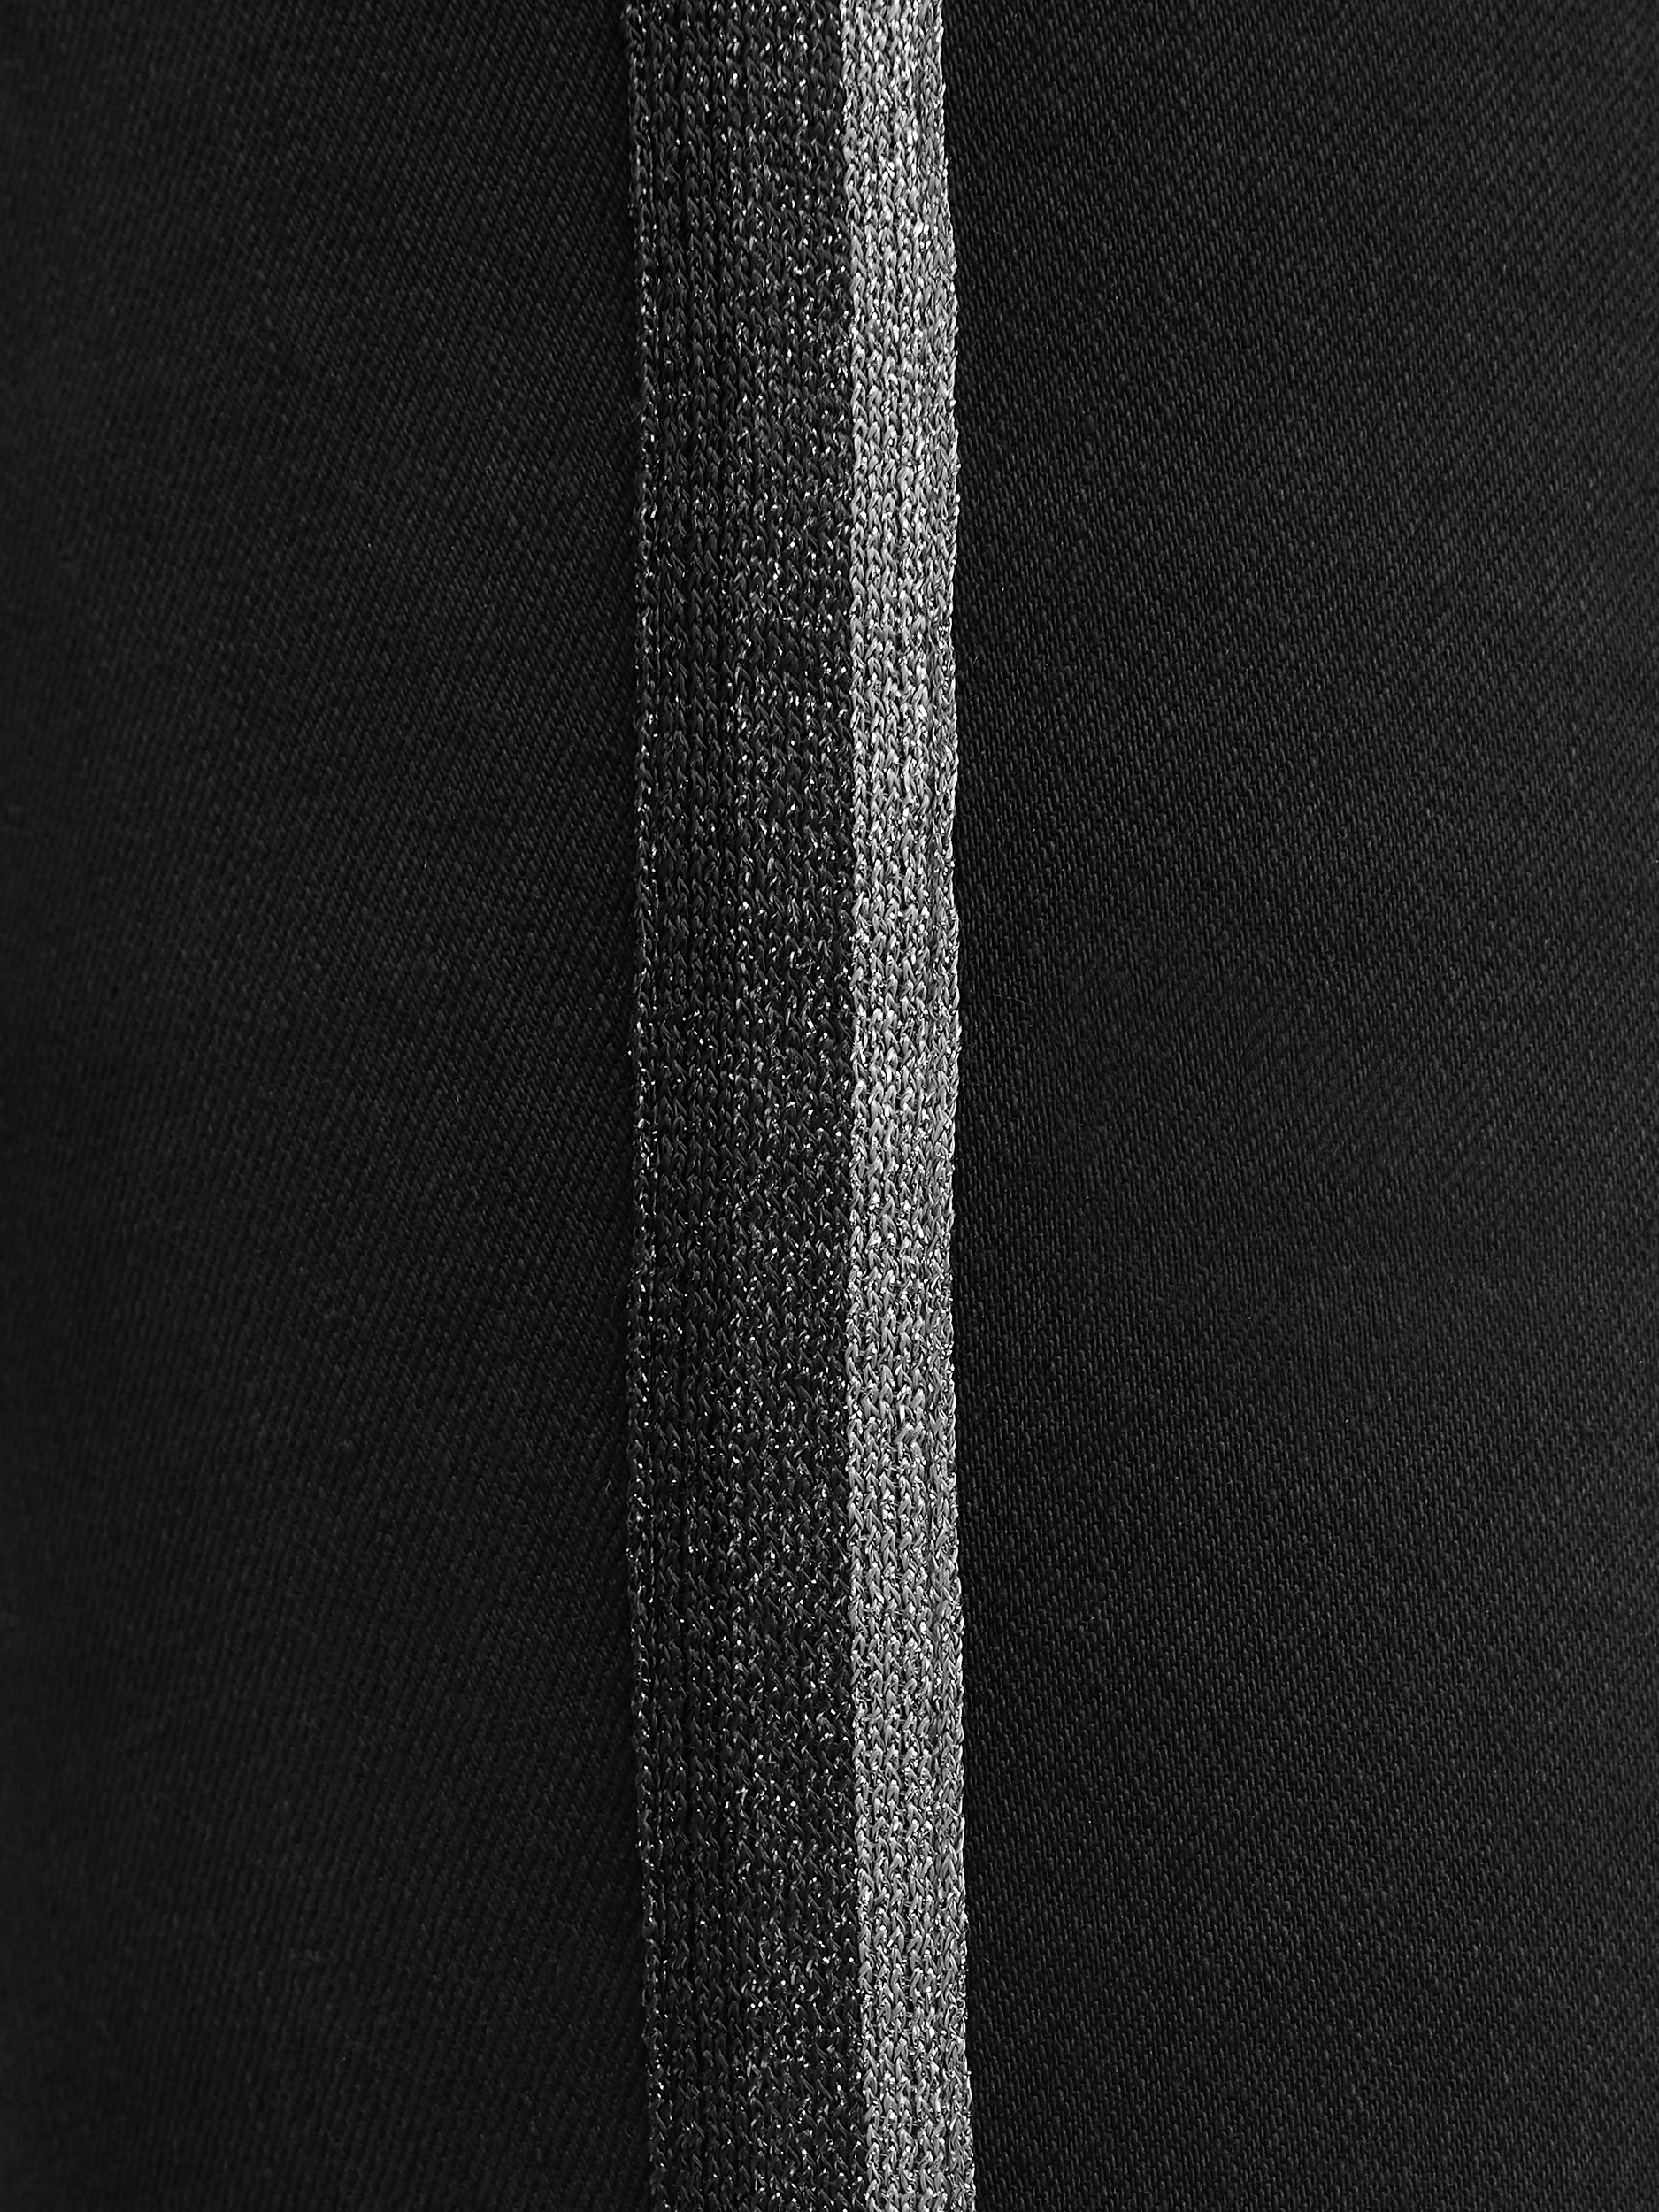 Sofia Jeans Mayra Lurex Side Stripe High Waist Crop Flare Jean Women's - image 3 of 6